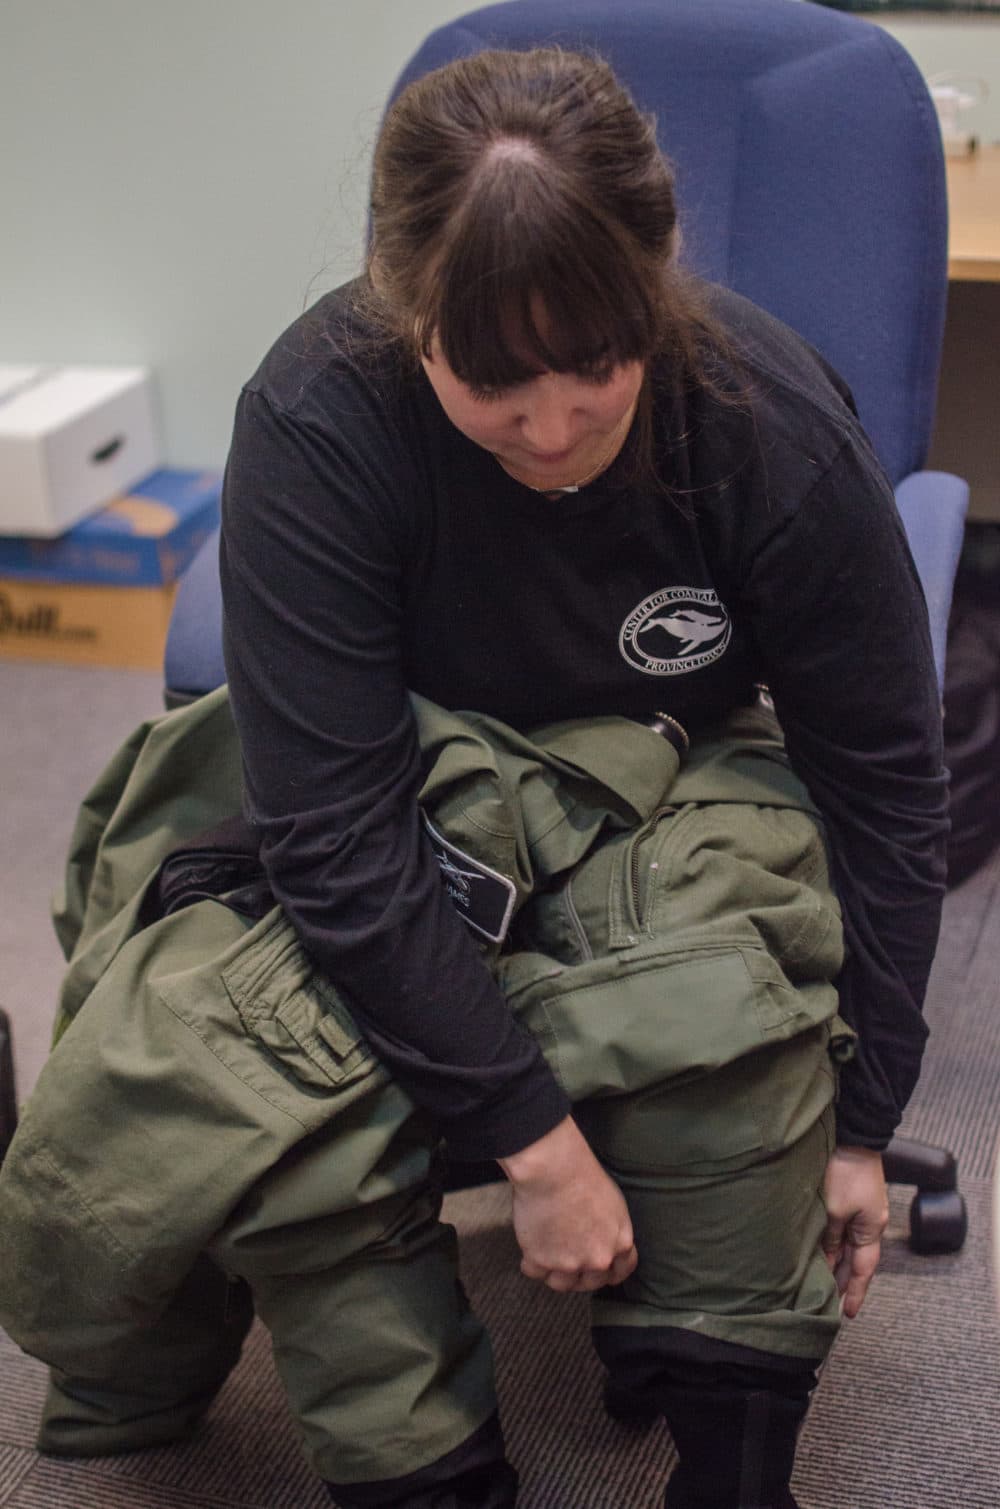 Amy James puts on her flight suit before a survey (Sharon Brody/WBUR)